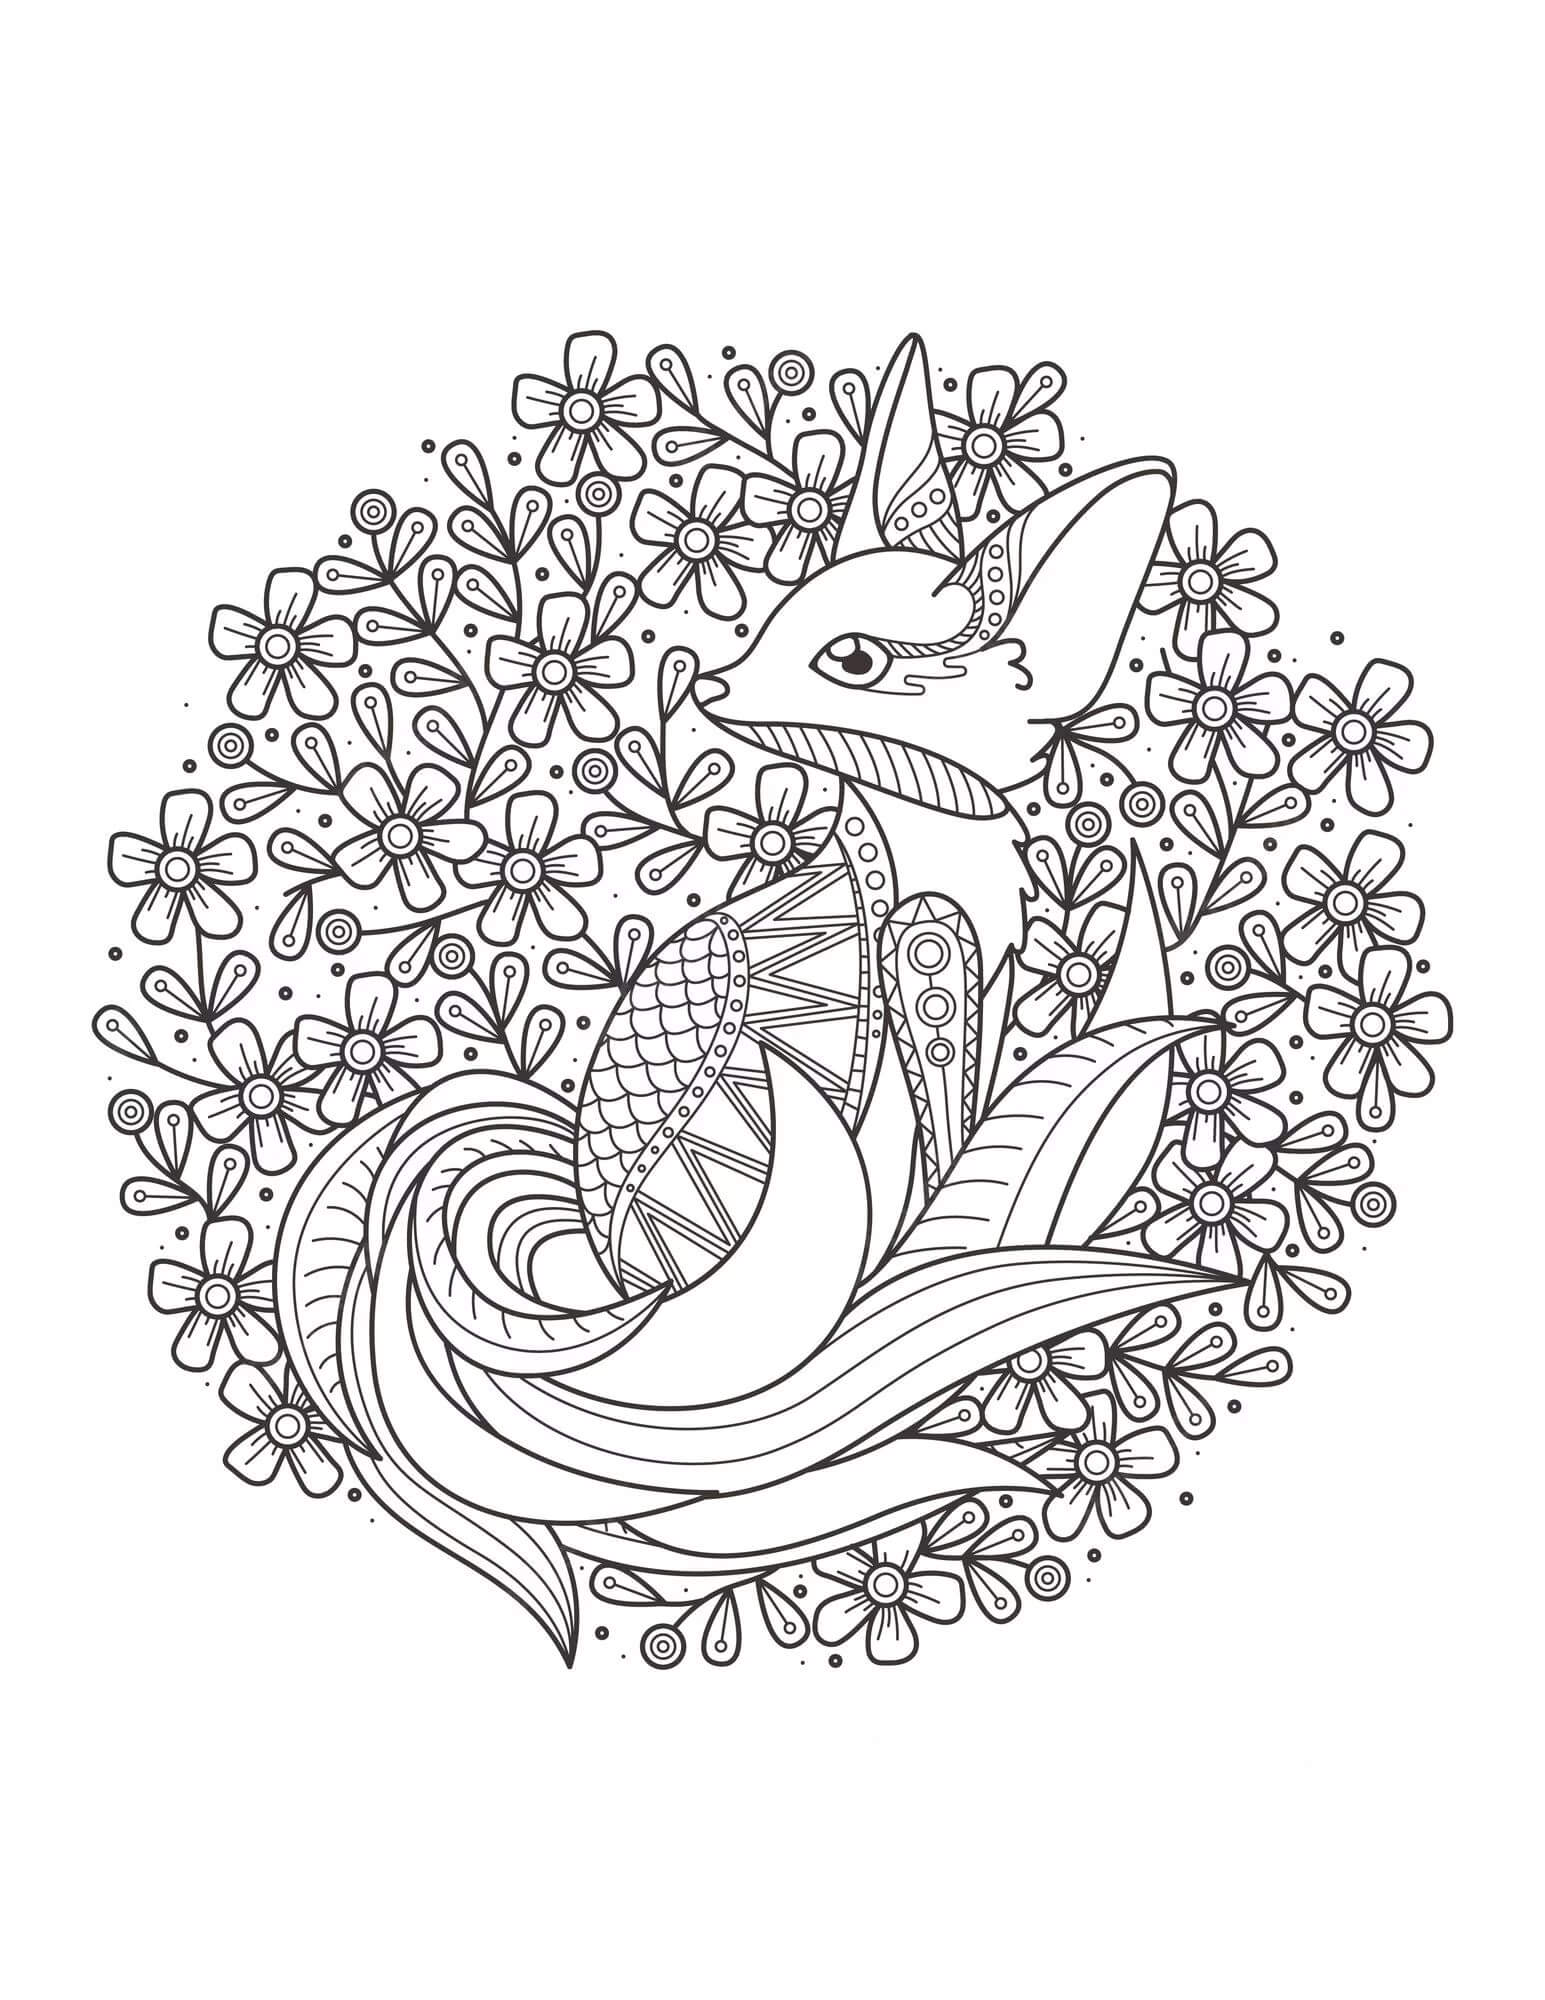 Mandala Fox With Leaves Coloring Page Mandalas